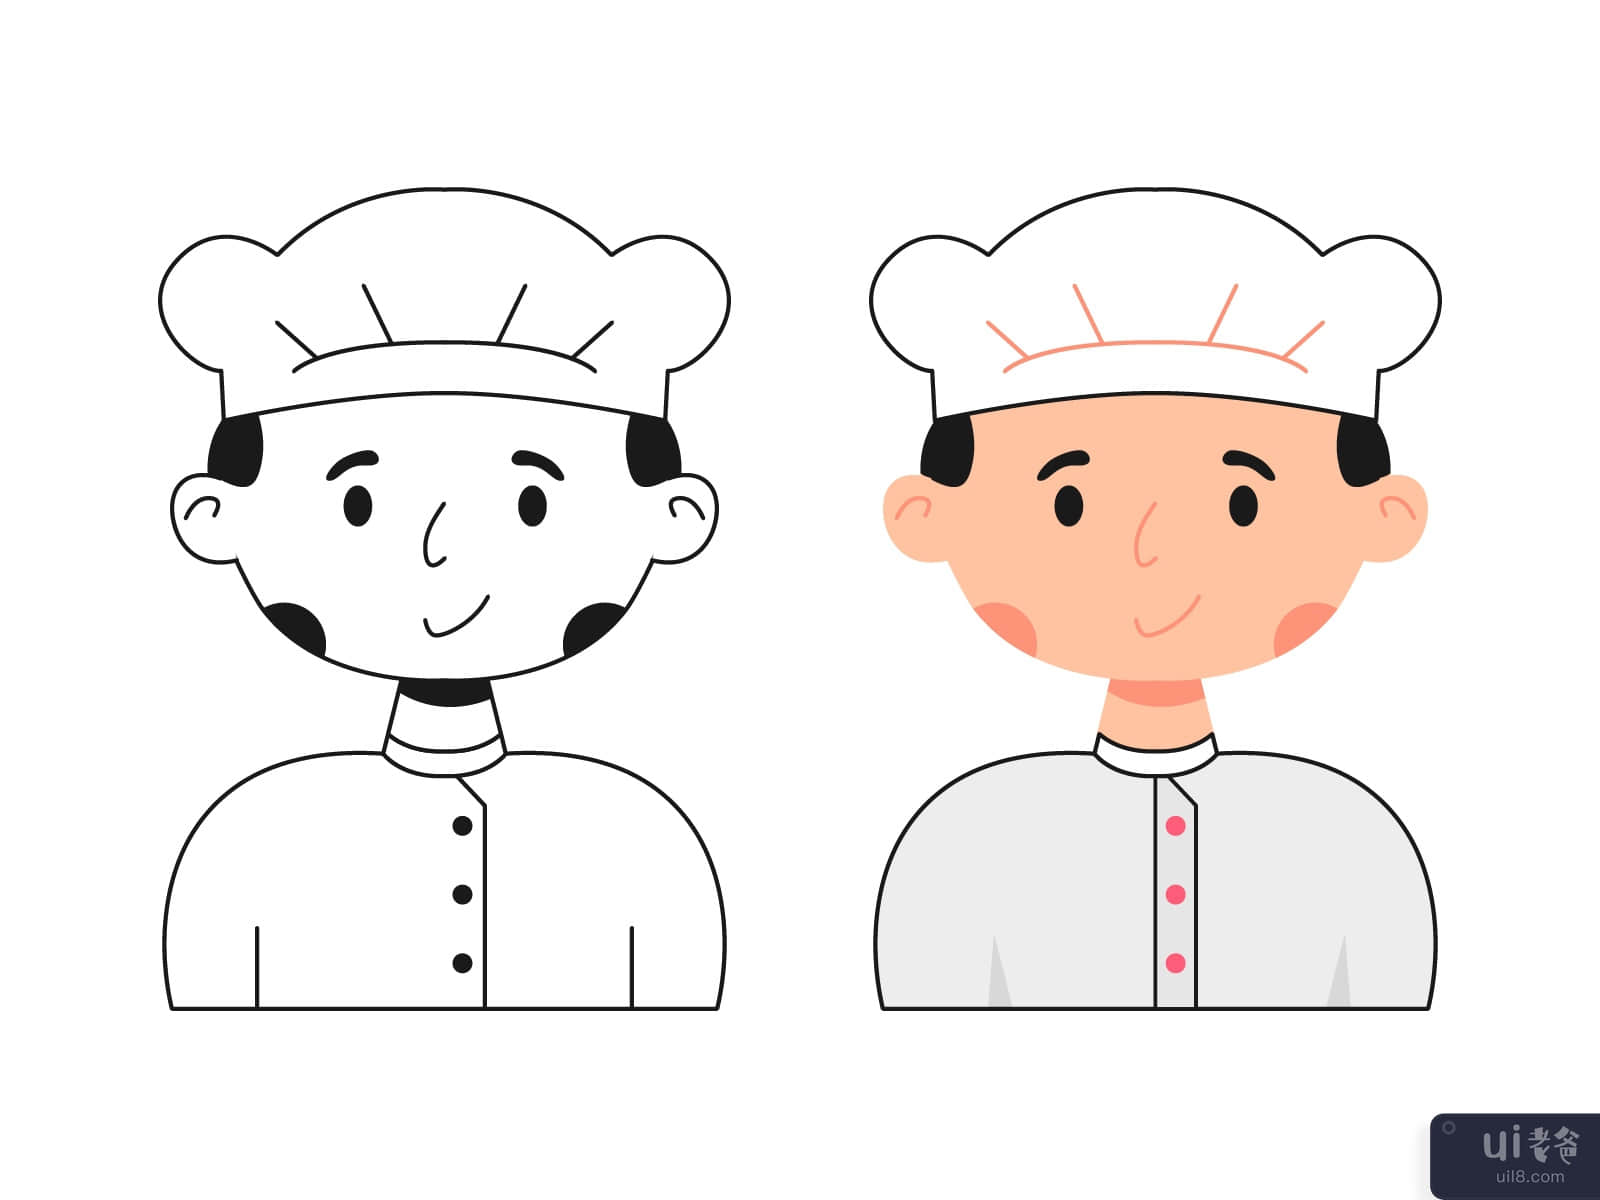 Chef Avatar Illustration